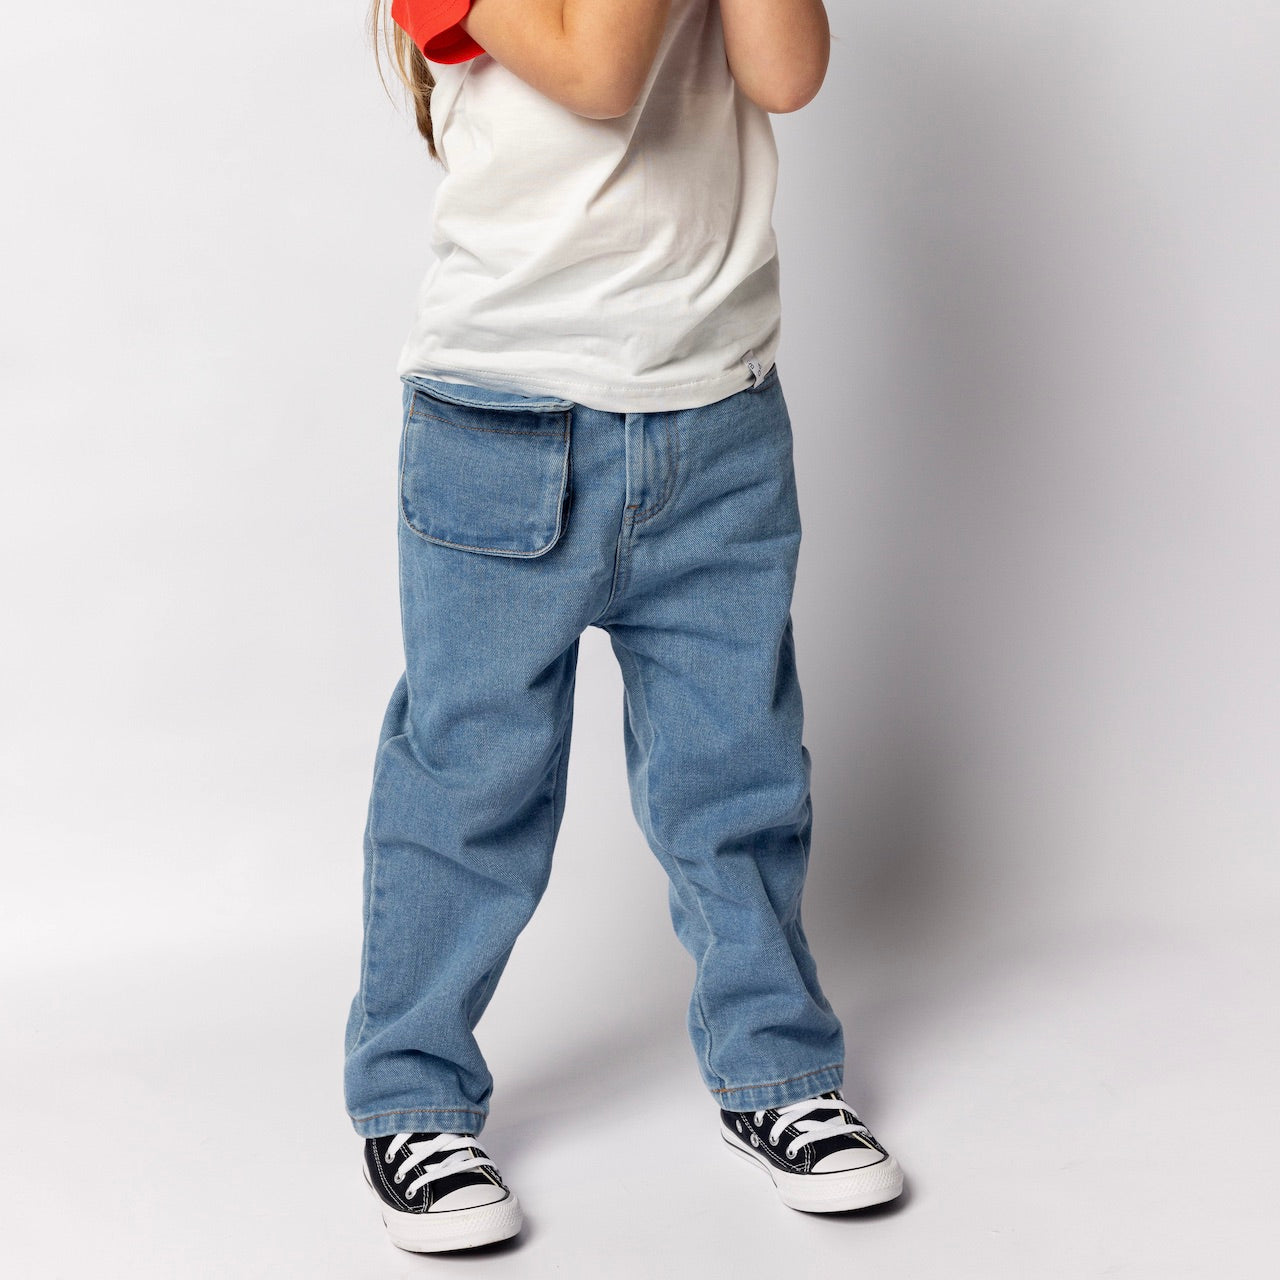 90's Kid Demim Jeans (Size 2-7)